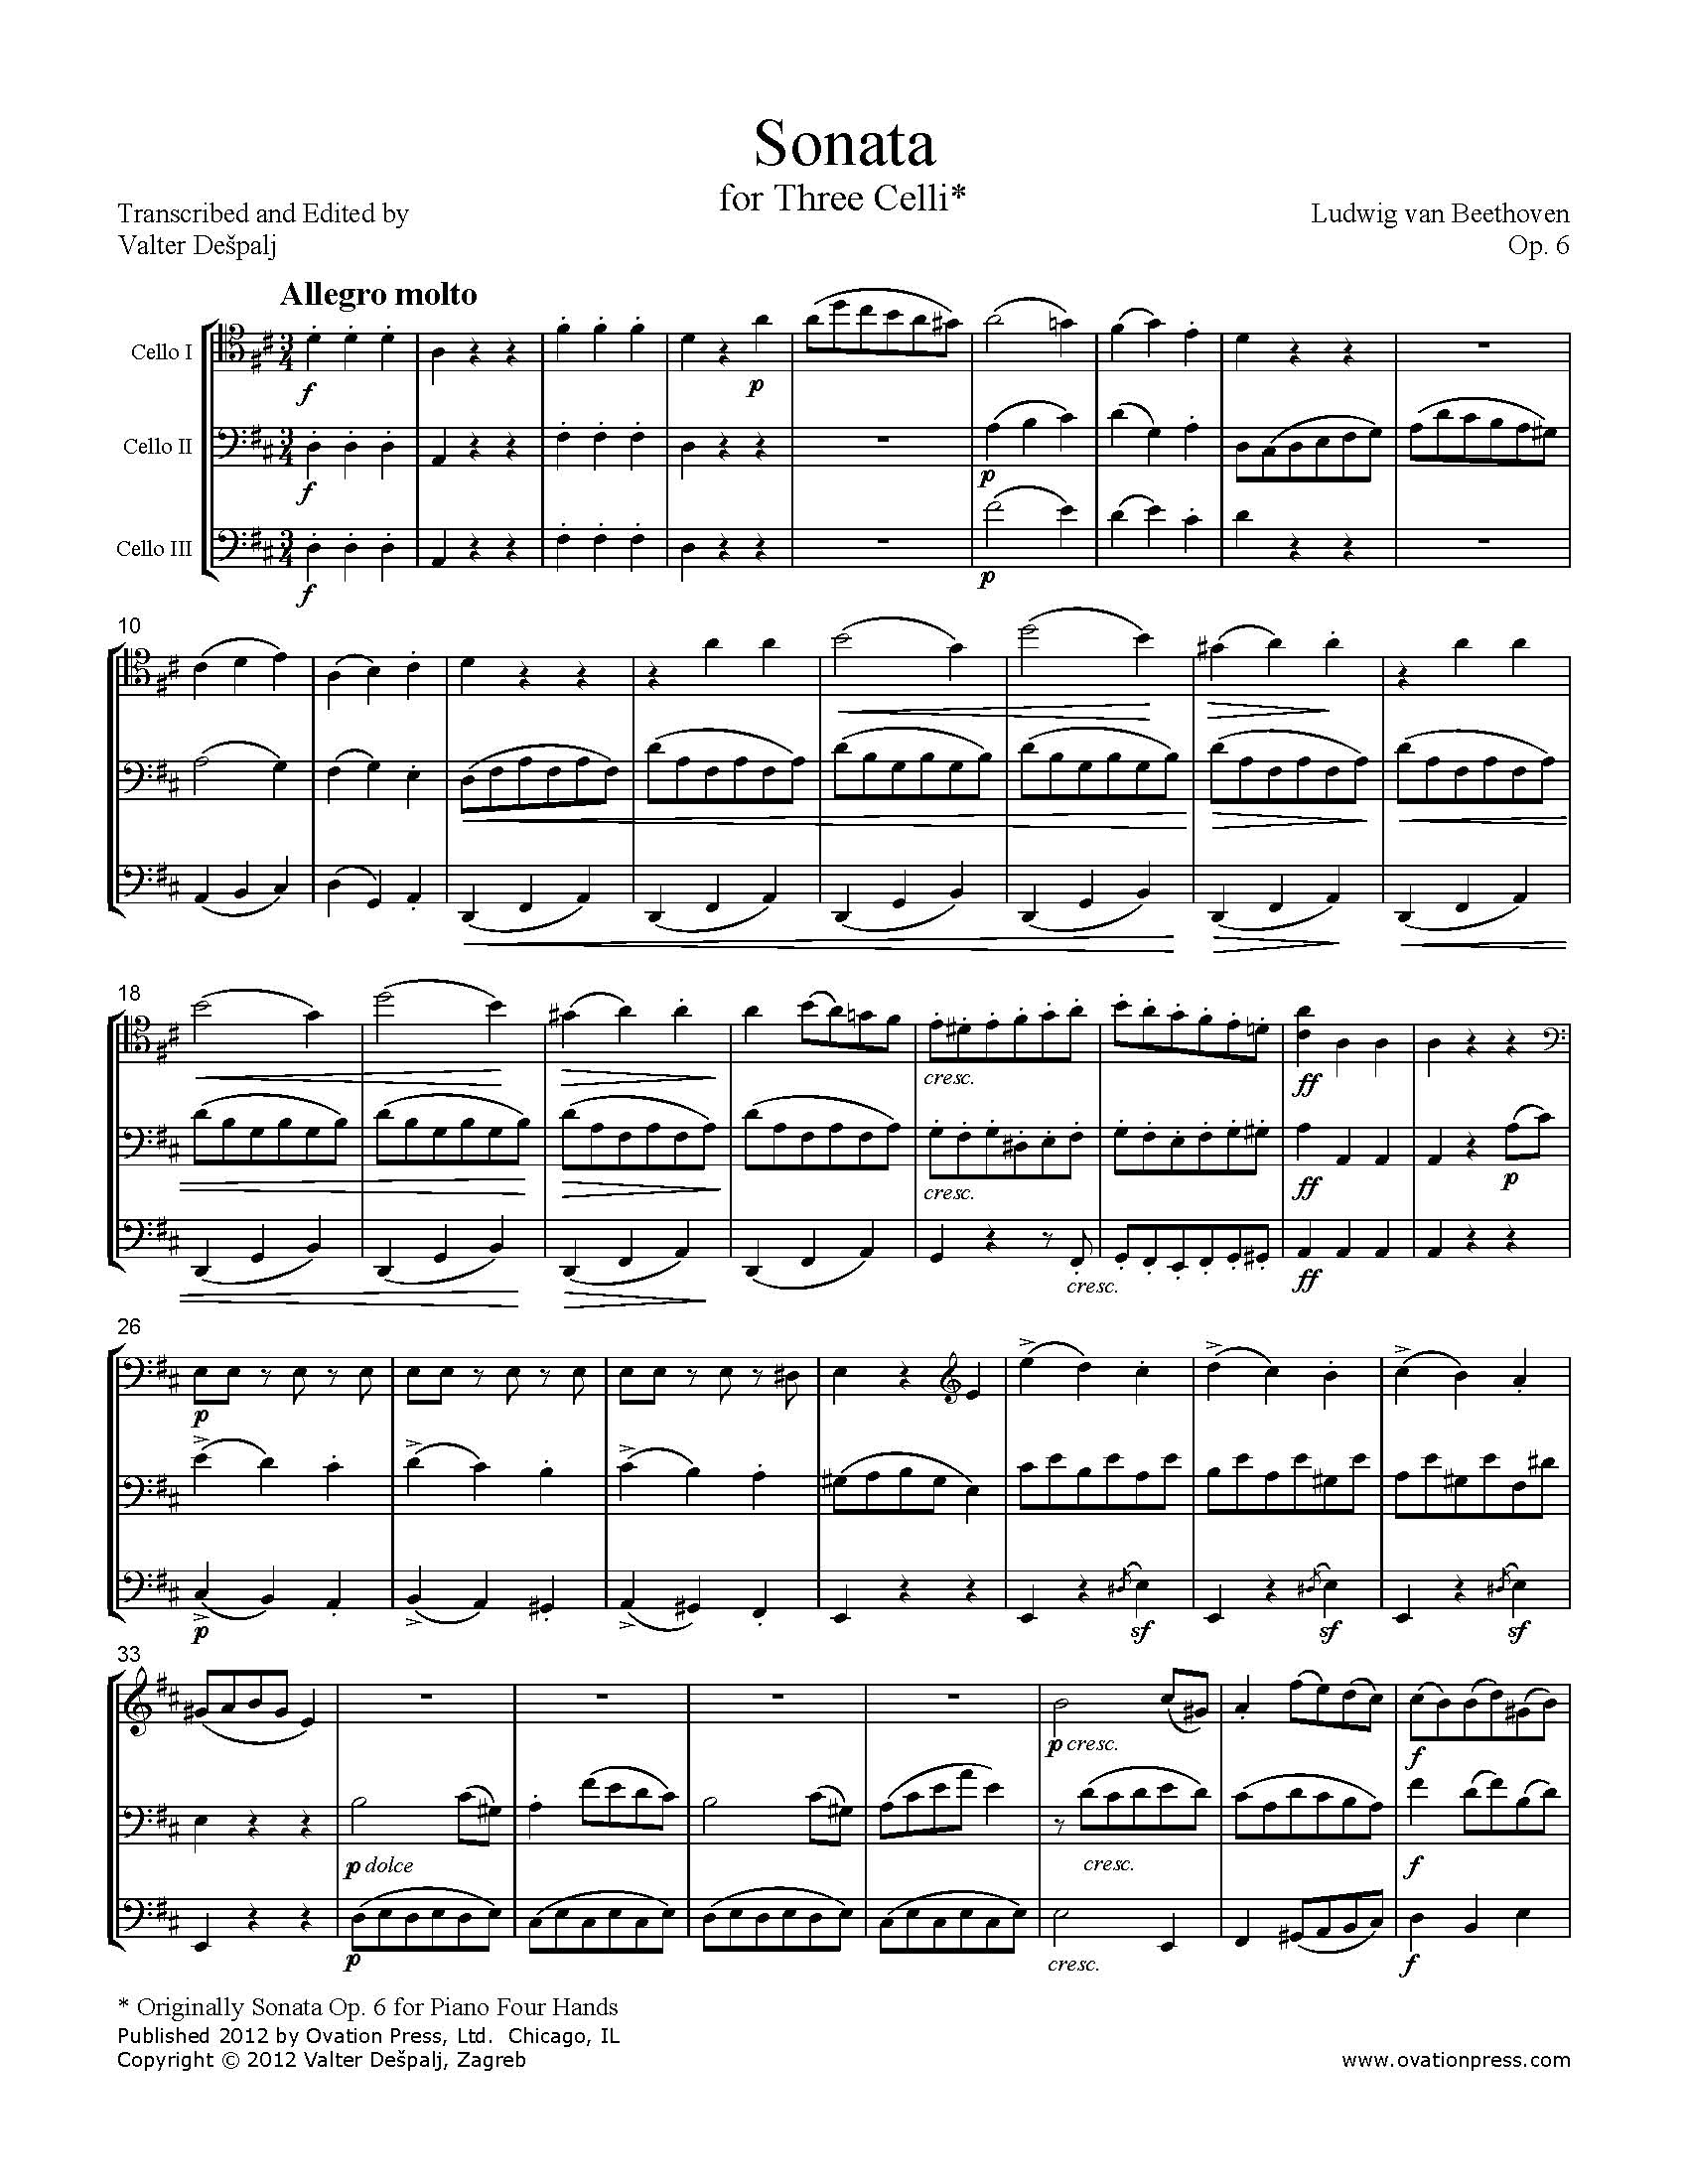 Beethoven Sonata Op. 6 Arranged for Cello Trio